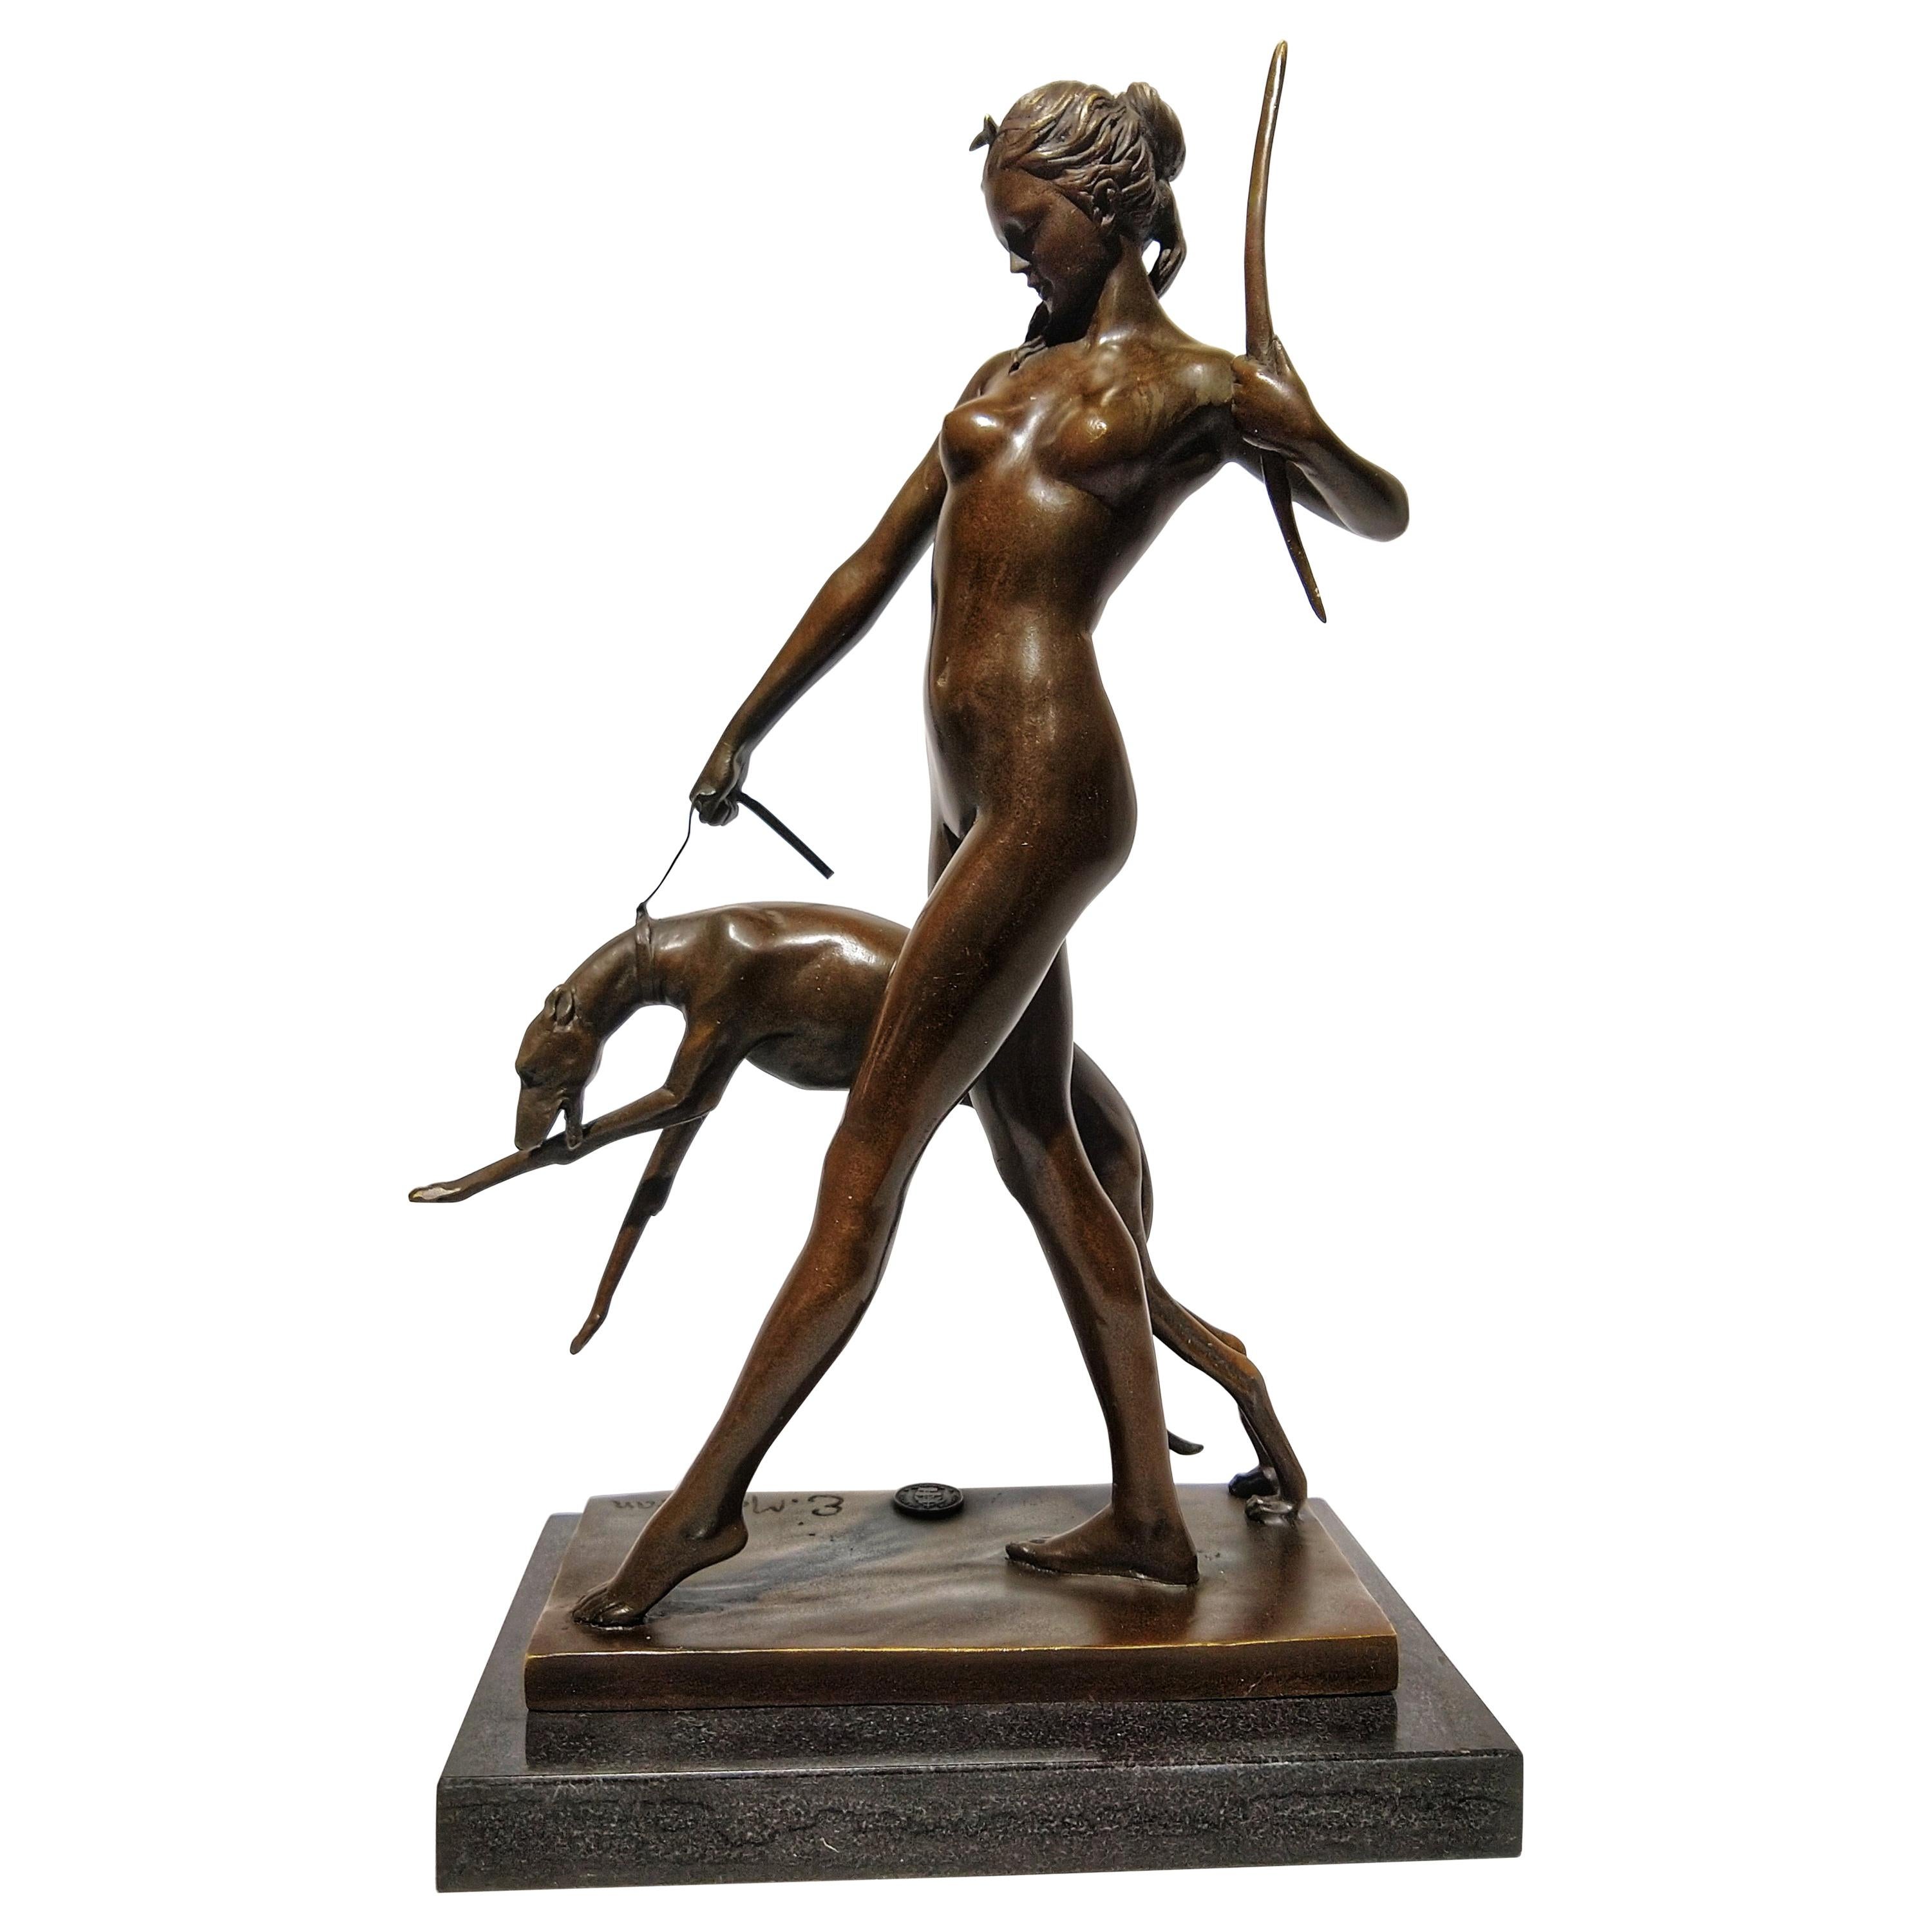 20th Century Art Deco Sculpture Figure Plum Bronze Diana Goddess of Hunting For Sale